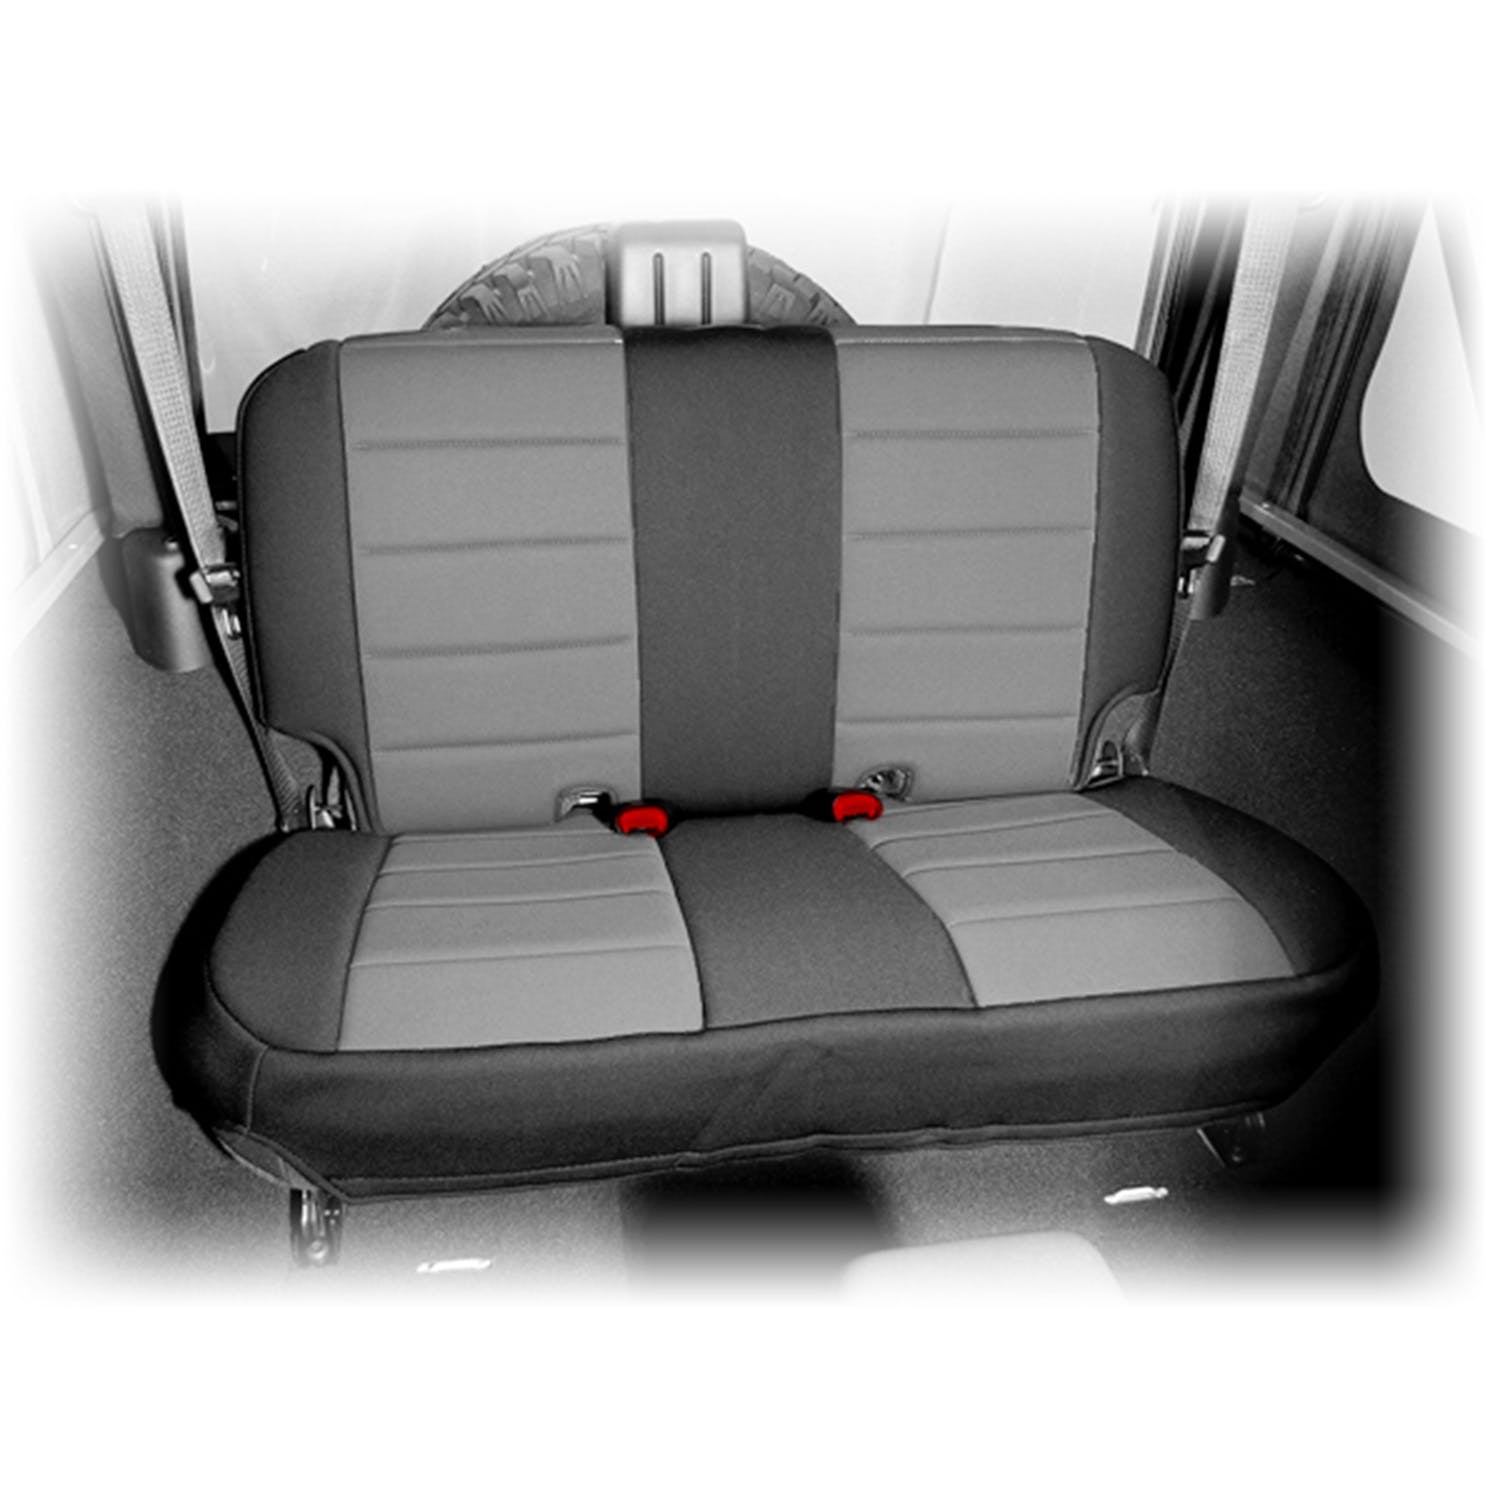 Rugged Ridge 13265.09 Neoprene Rear Seat Cover; Black/Gray; 07-17 Jeep Wrangler JK